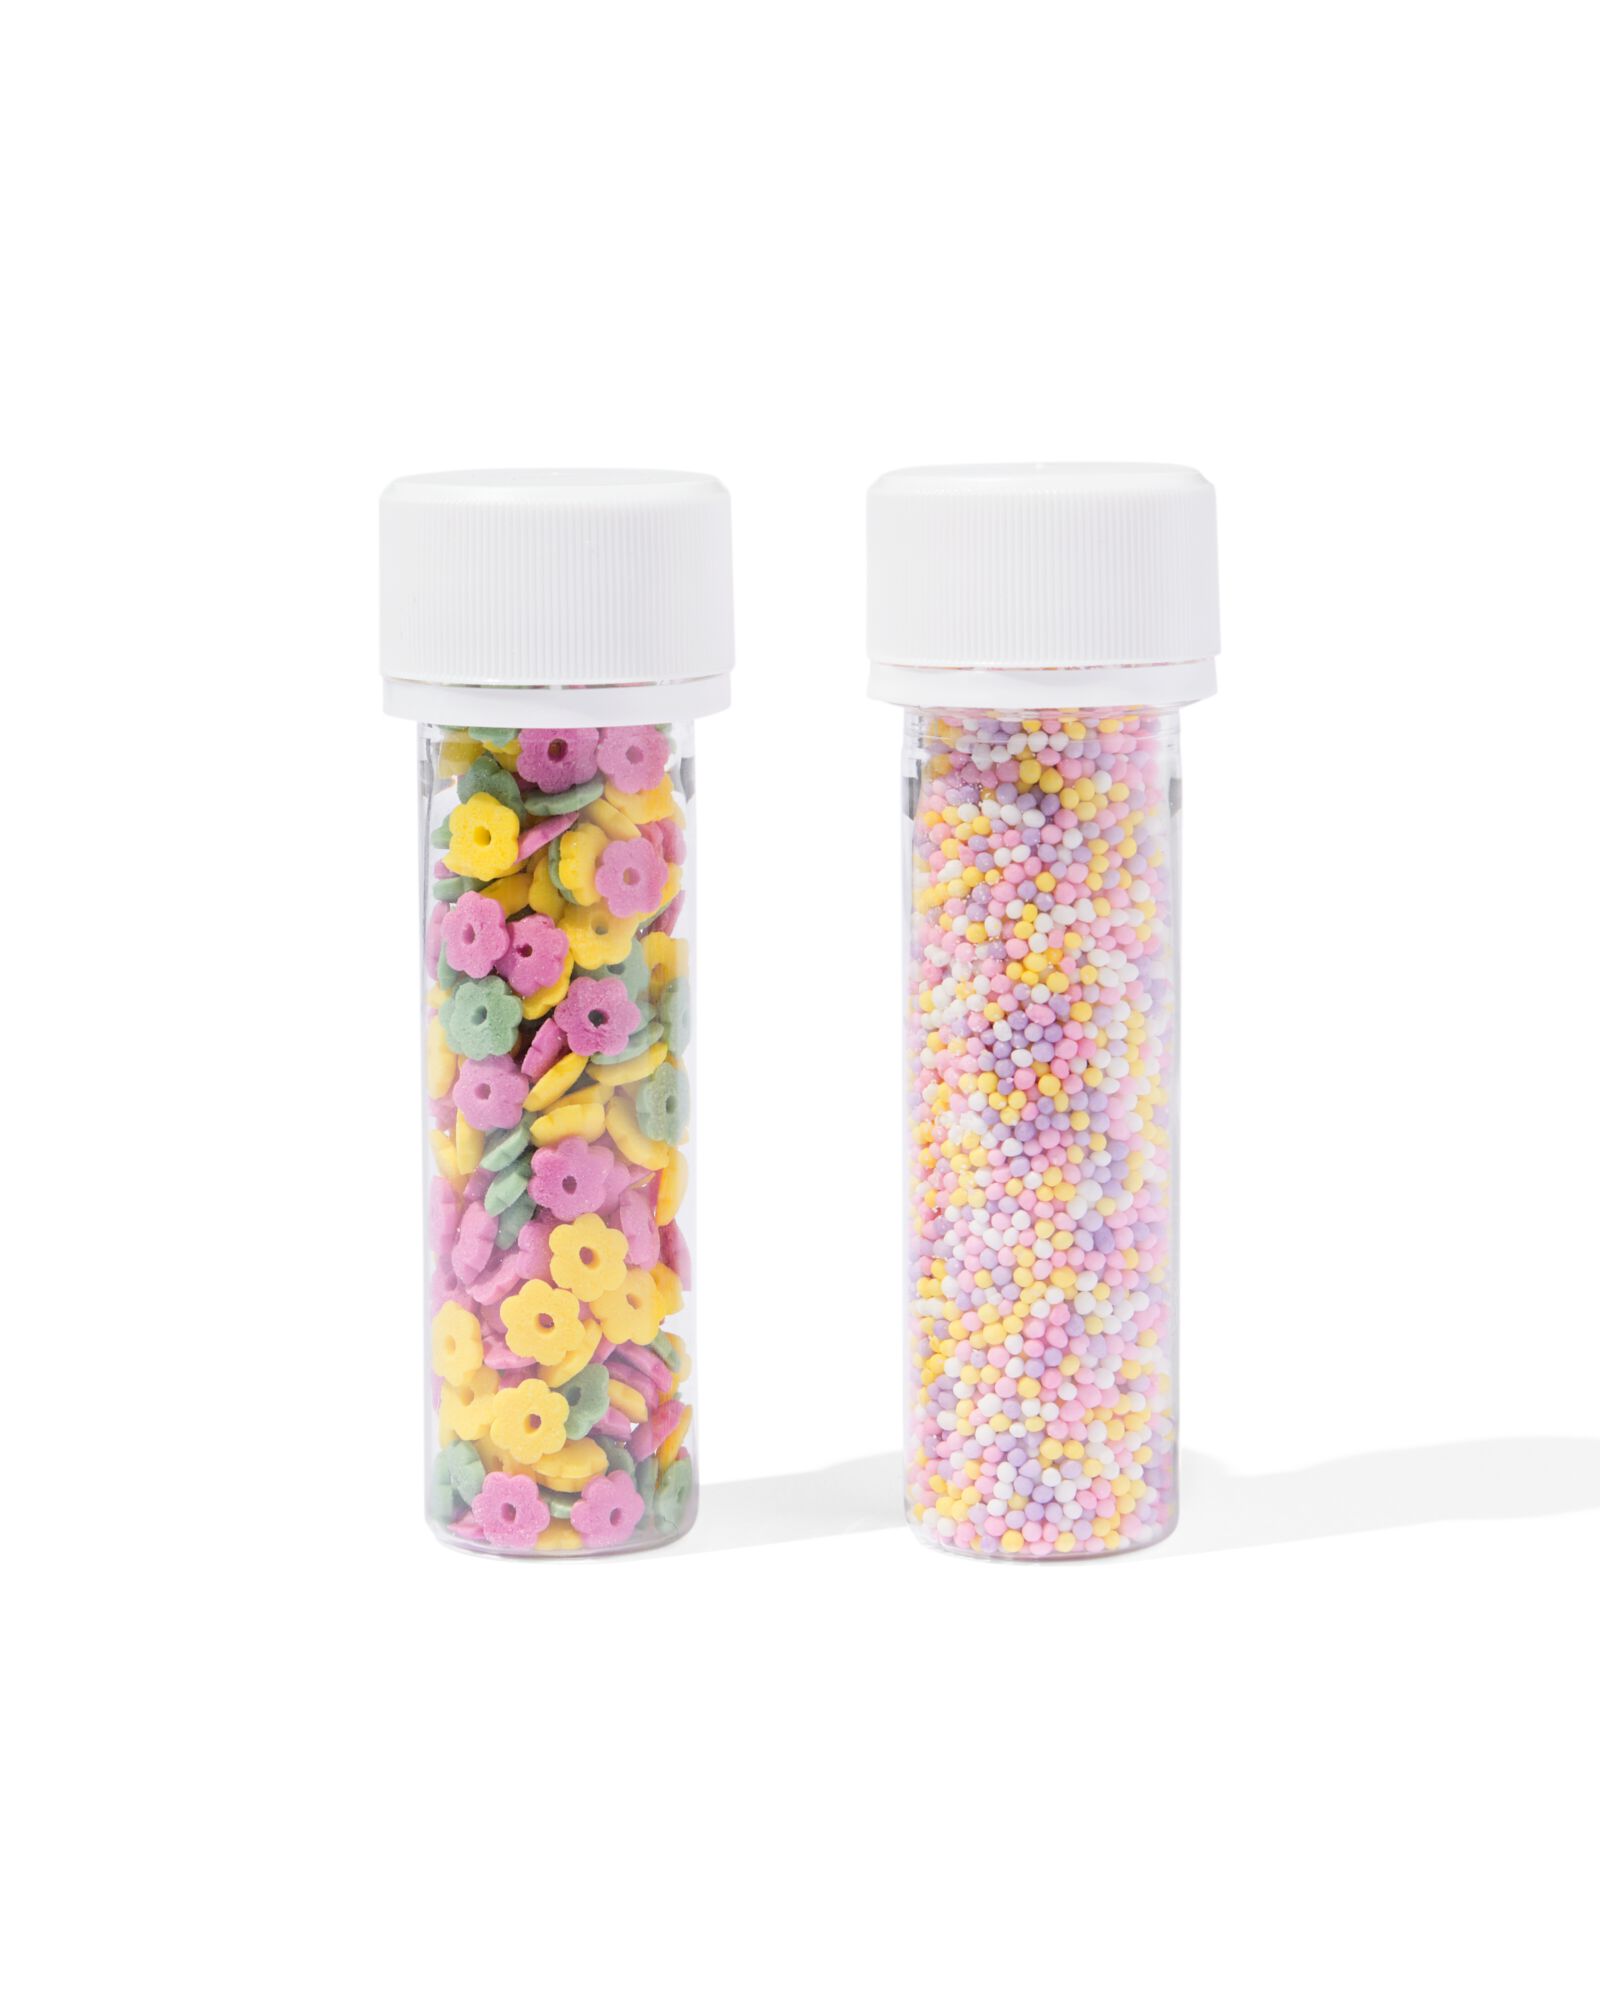 HEMA Versierplezier Eetbare Sprinkles Bloemenmix